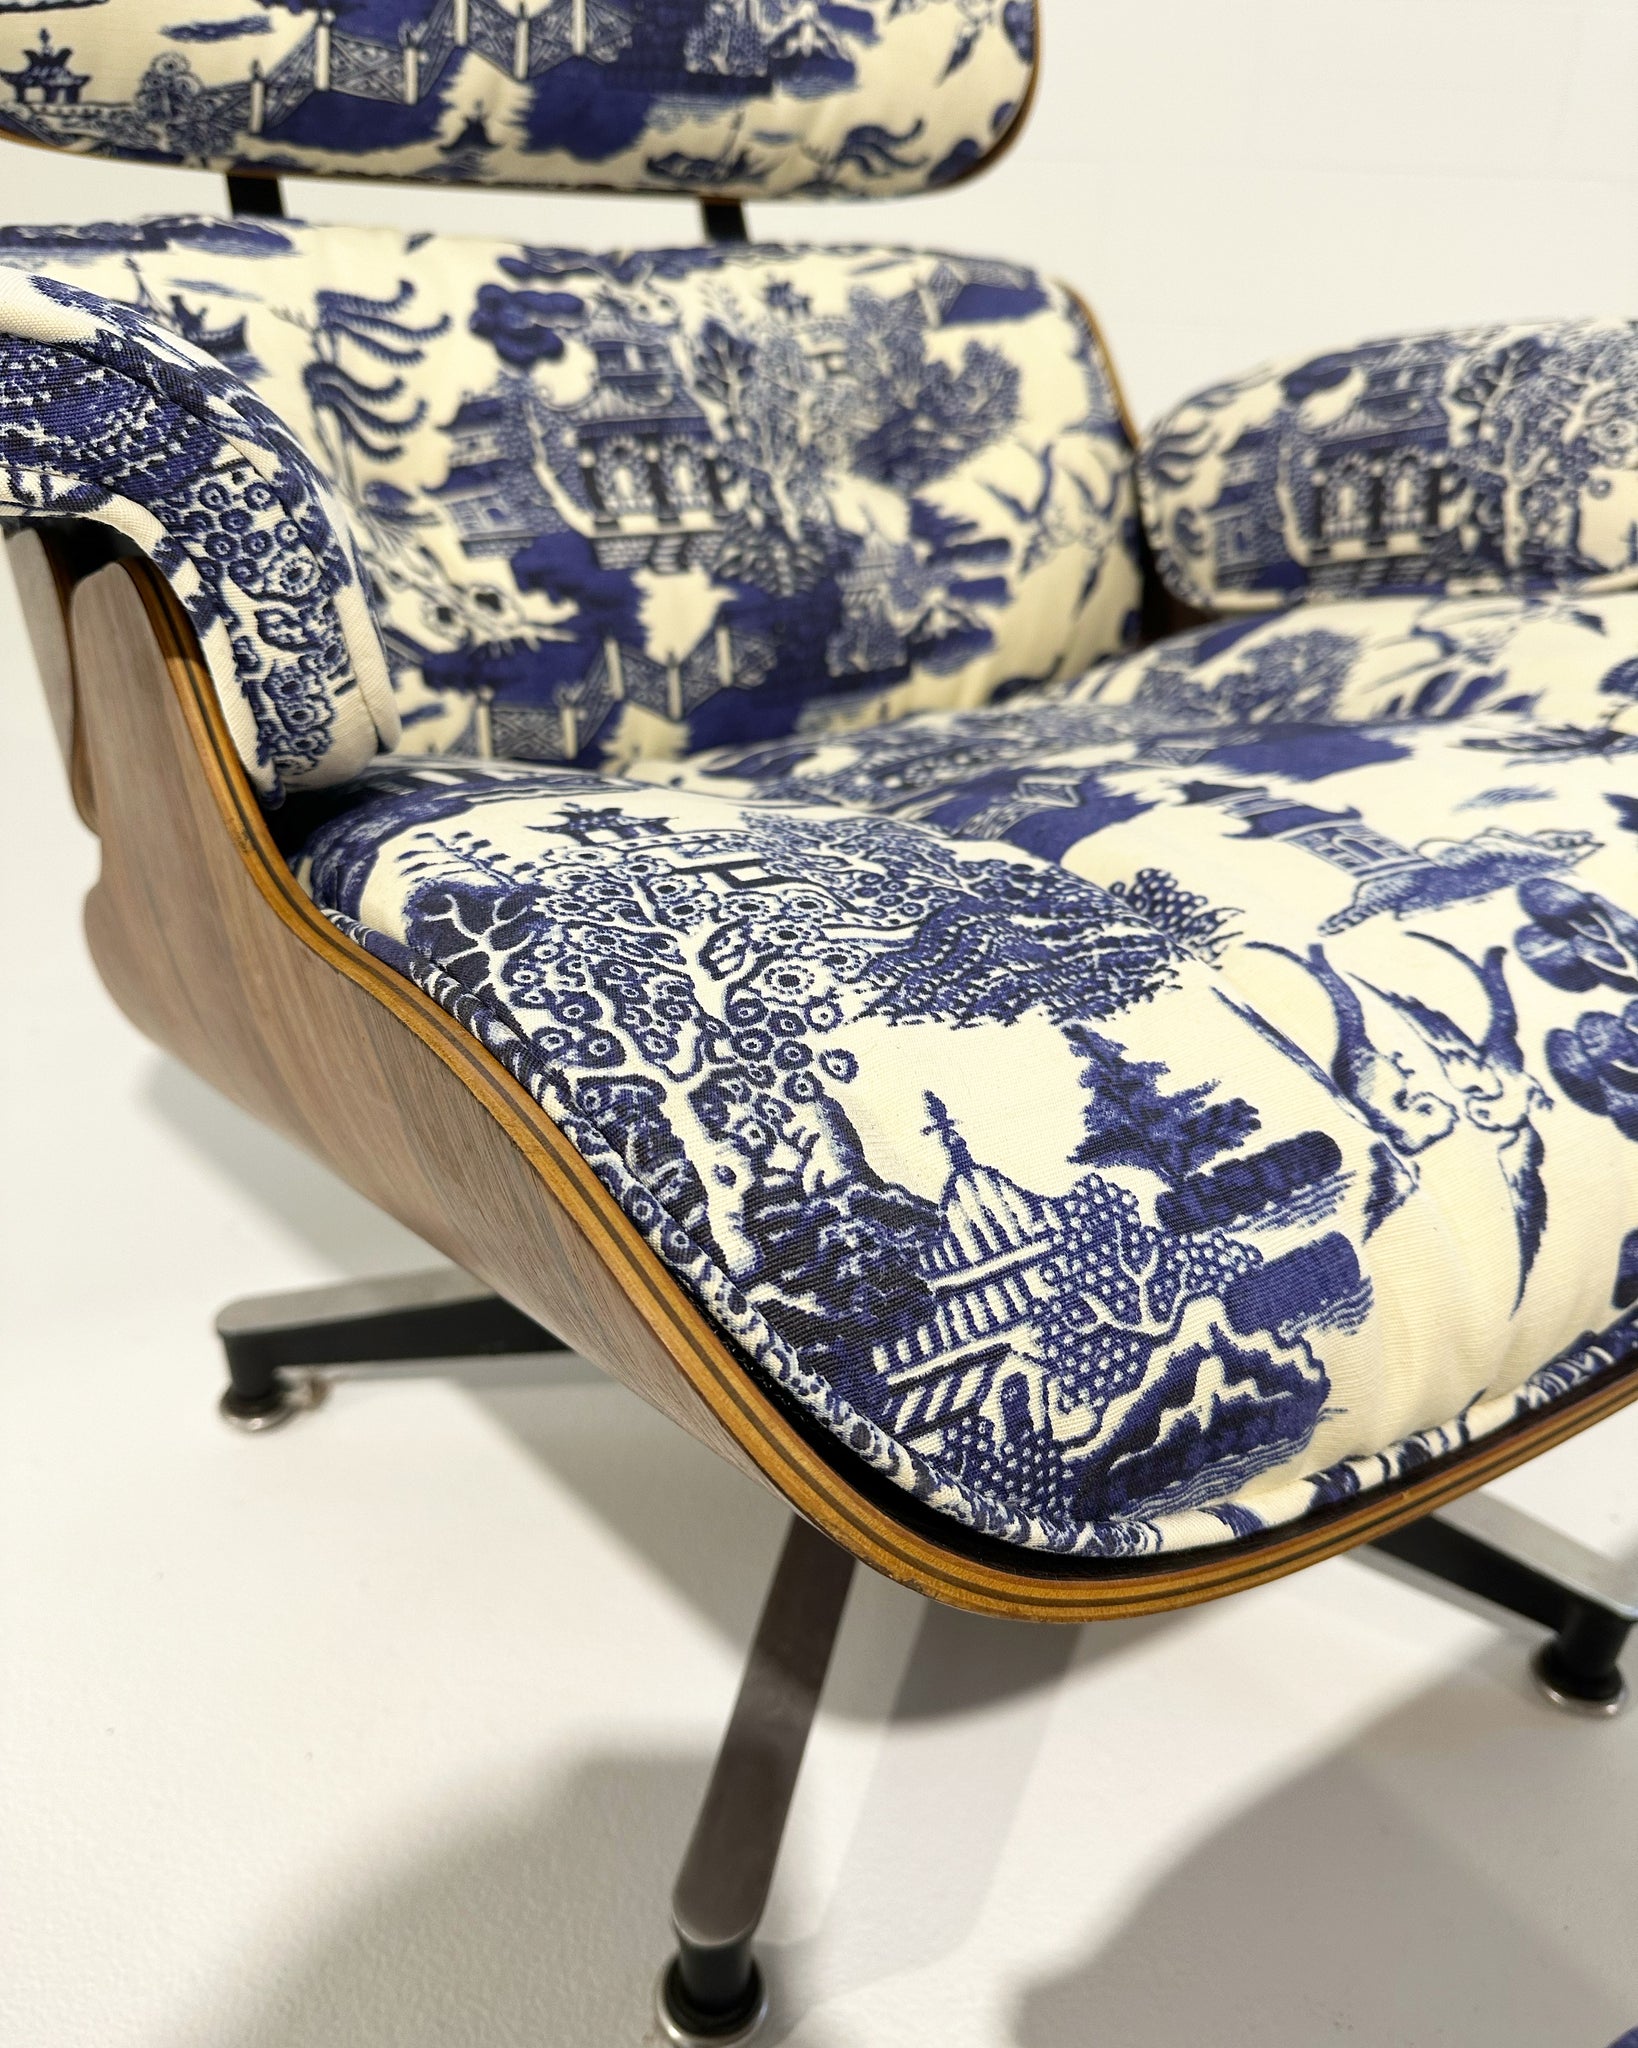 670 Lounge Chair & 671 Ottoman in Beata Heuman Willow Linen Cotton